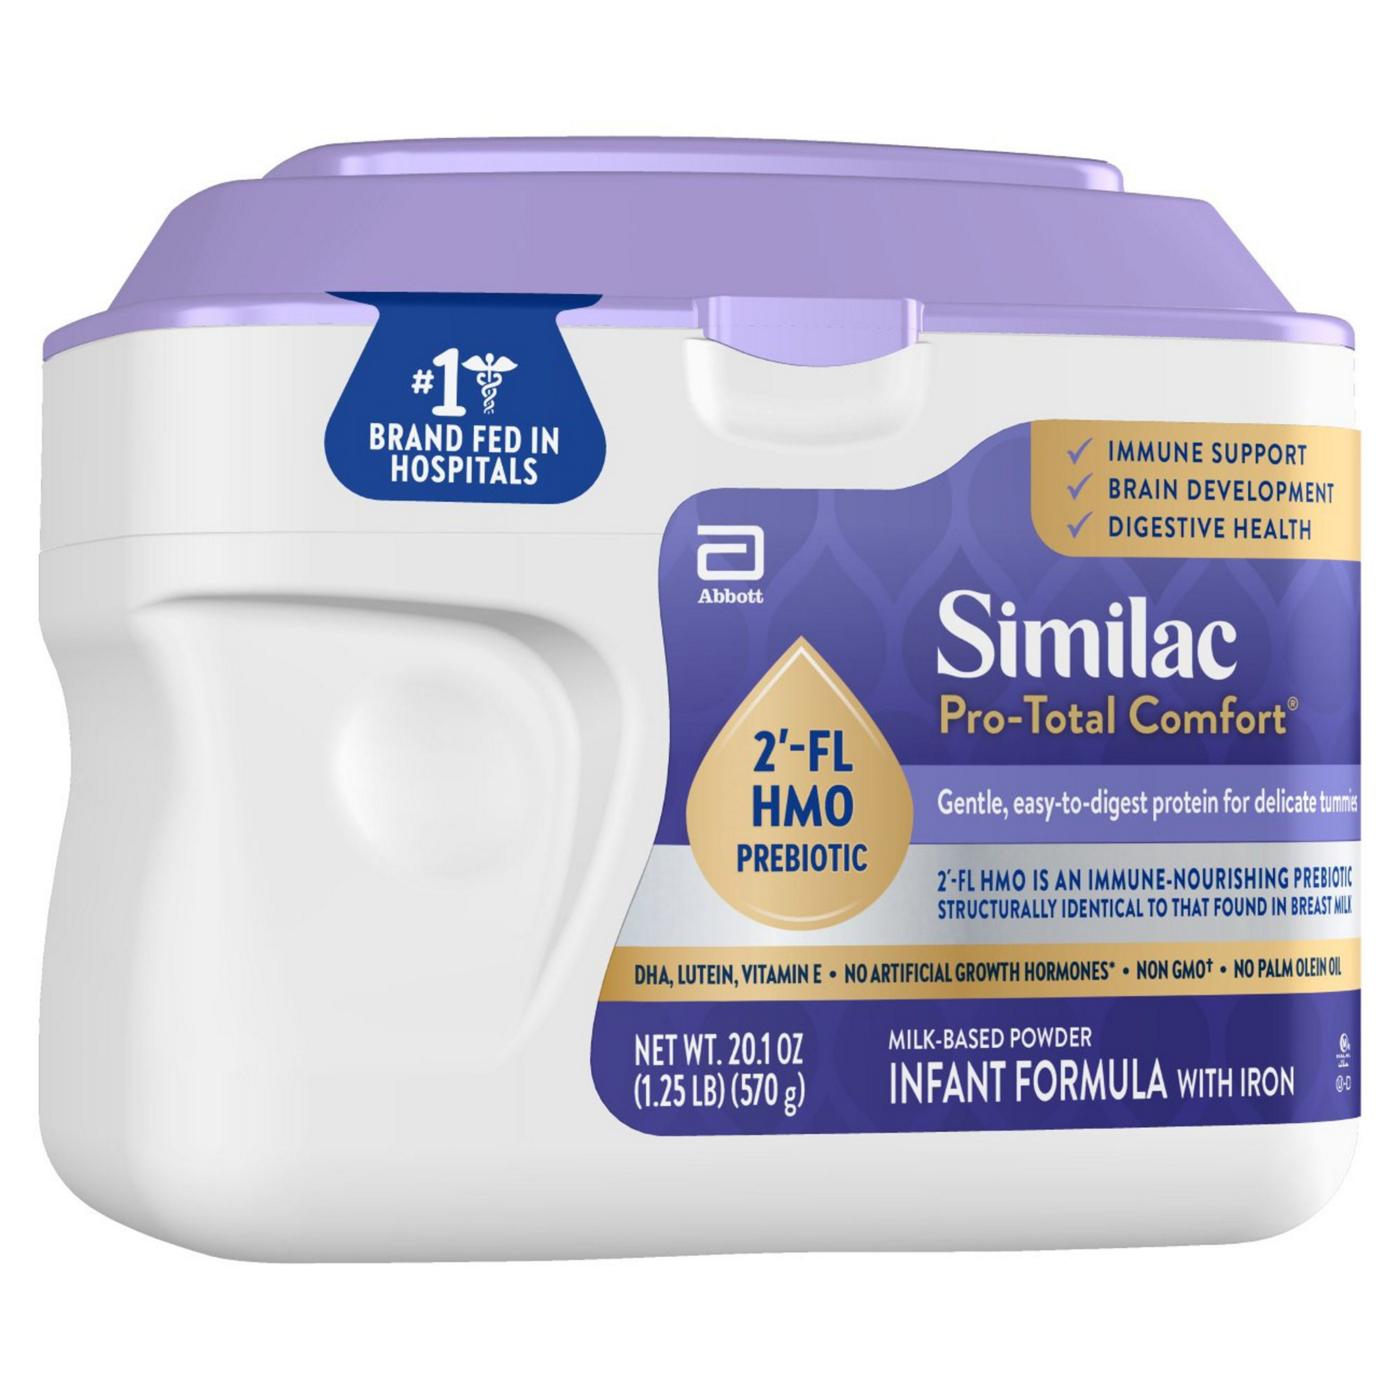 Similac Pro-Total Comfort Infant Formula Powder; image 5 of 5